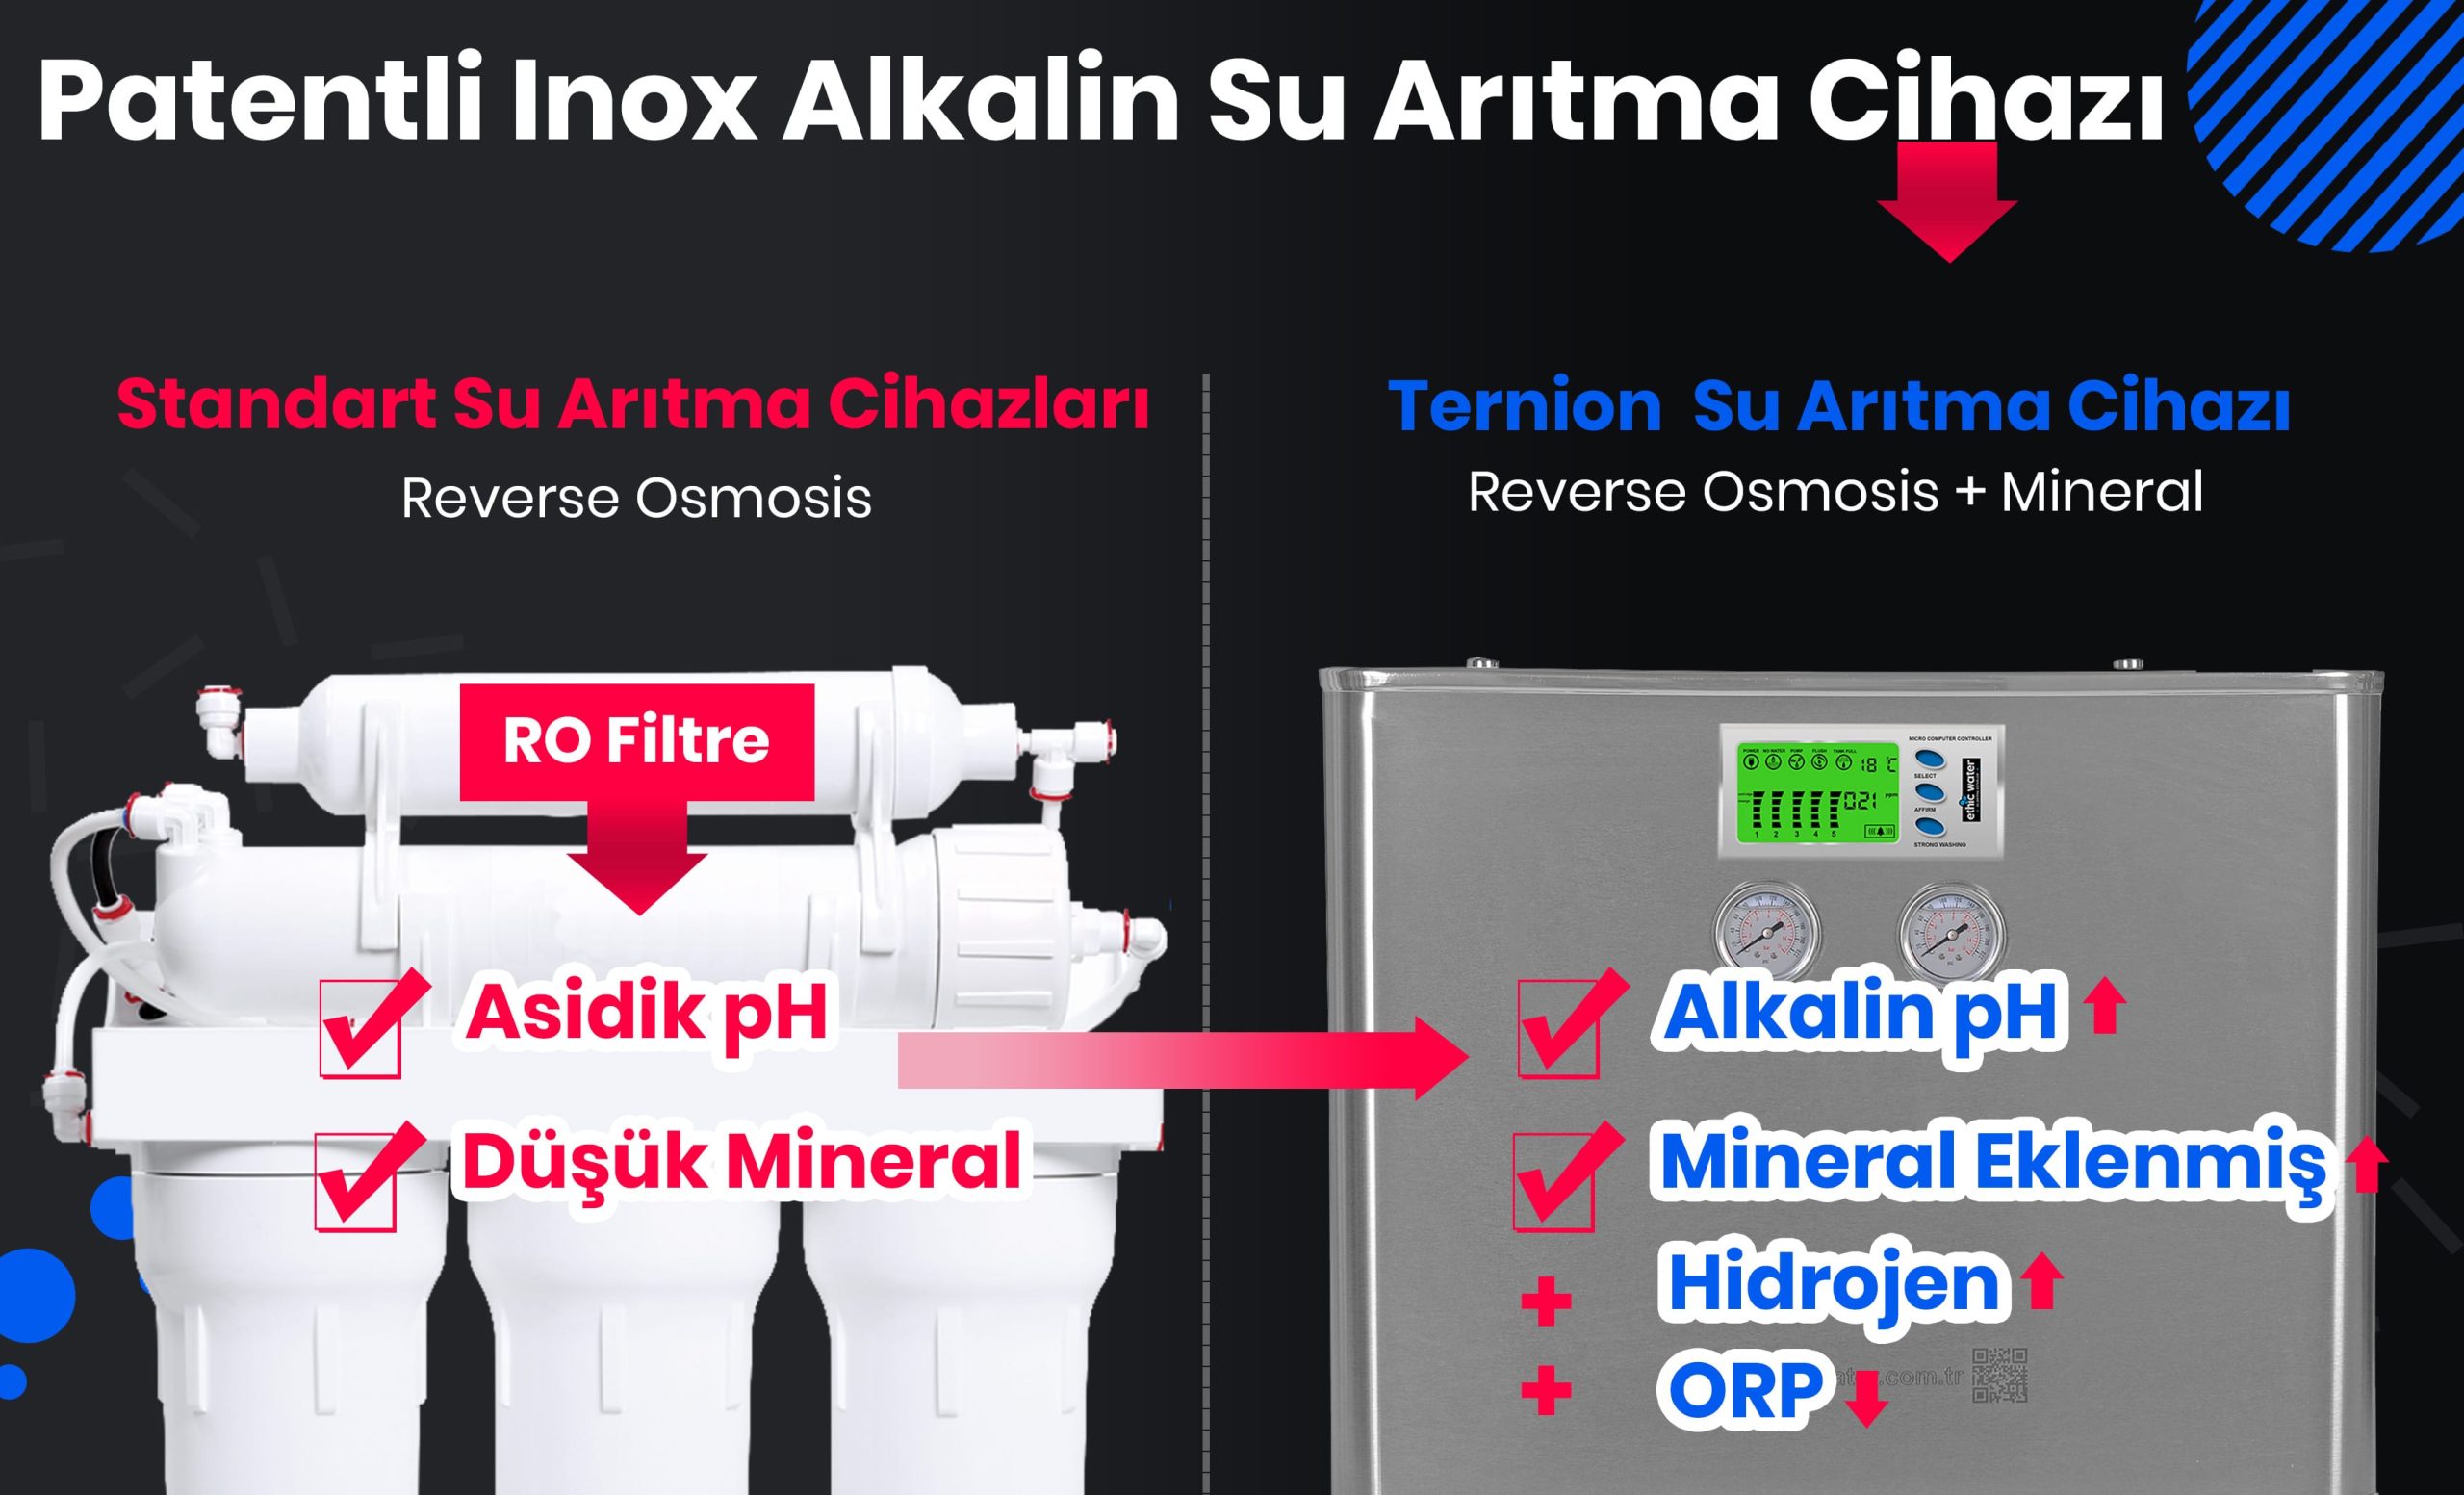 Ternion su arıtma cihazı mineral, alkali ve ORP banneri - Alkali Su Arıtma Cihazı